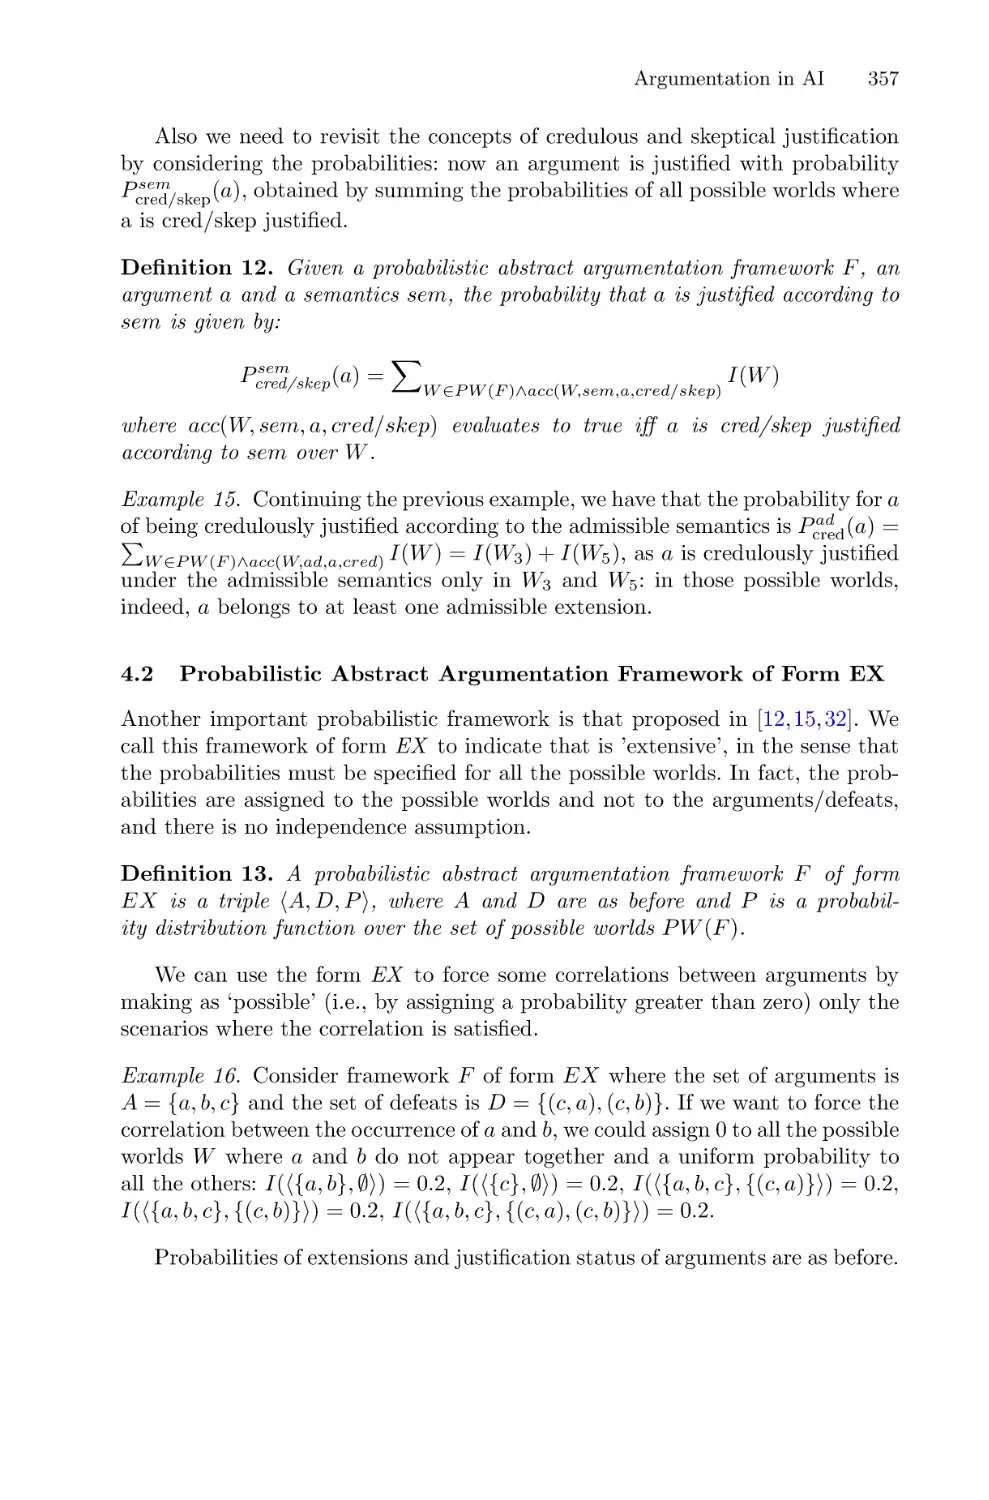 4.2 Probabilistic Abstract Argumentation Framework of Form EX